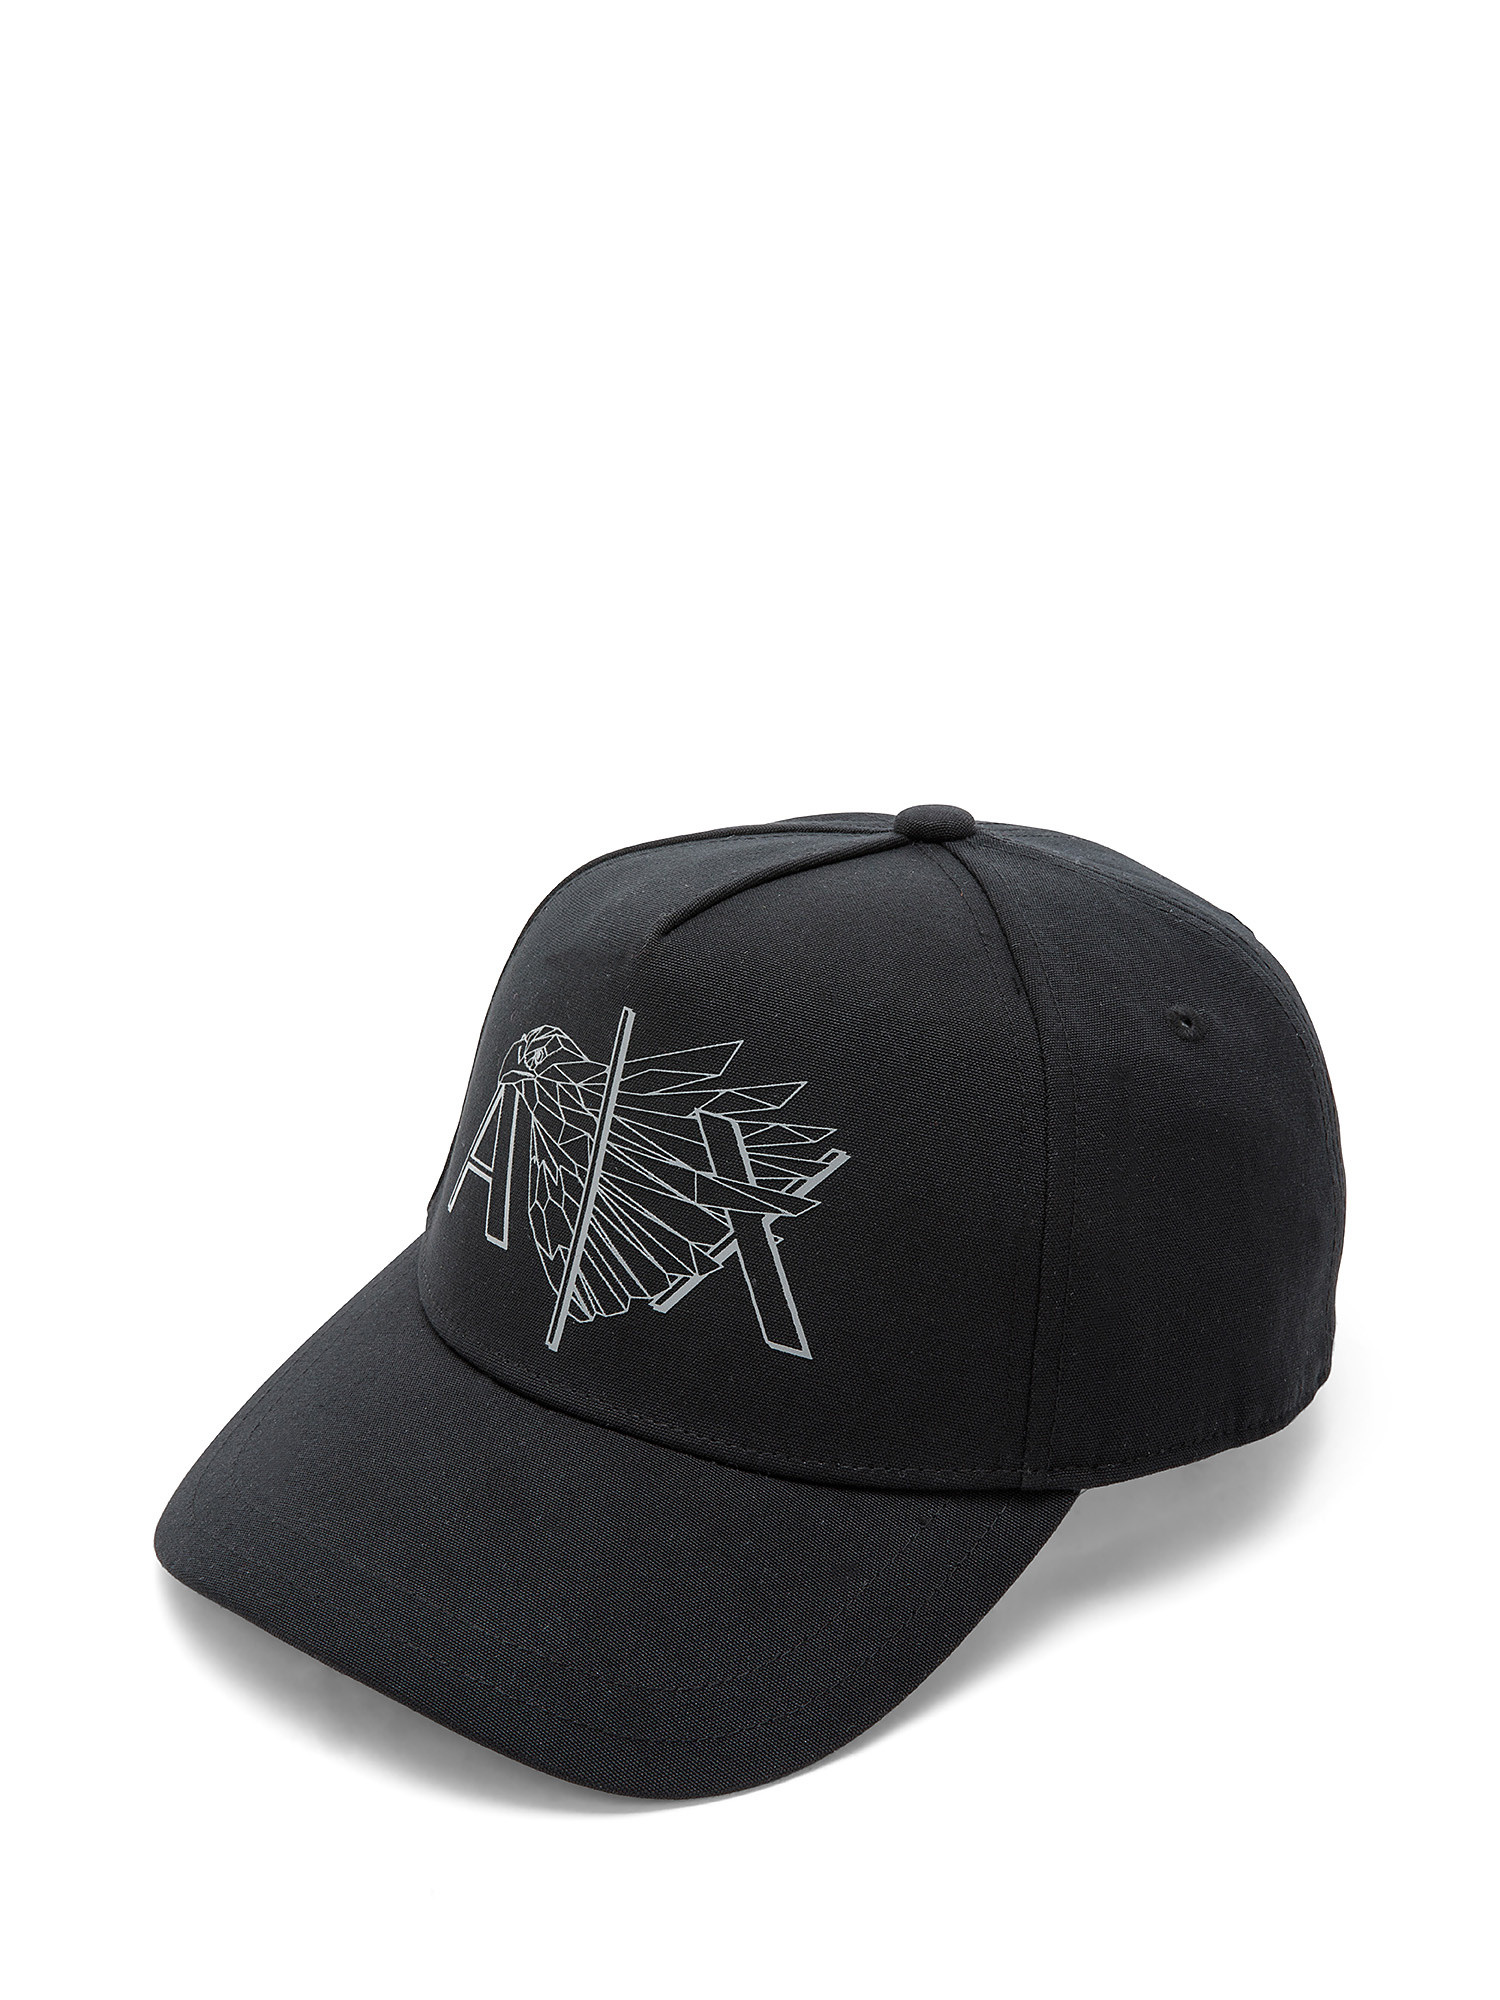 Armani Exchange - Baseball cap with logo, Black, large image number 0